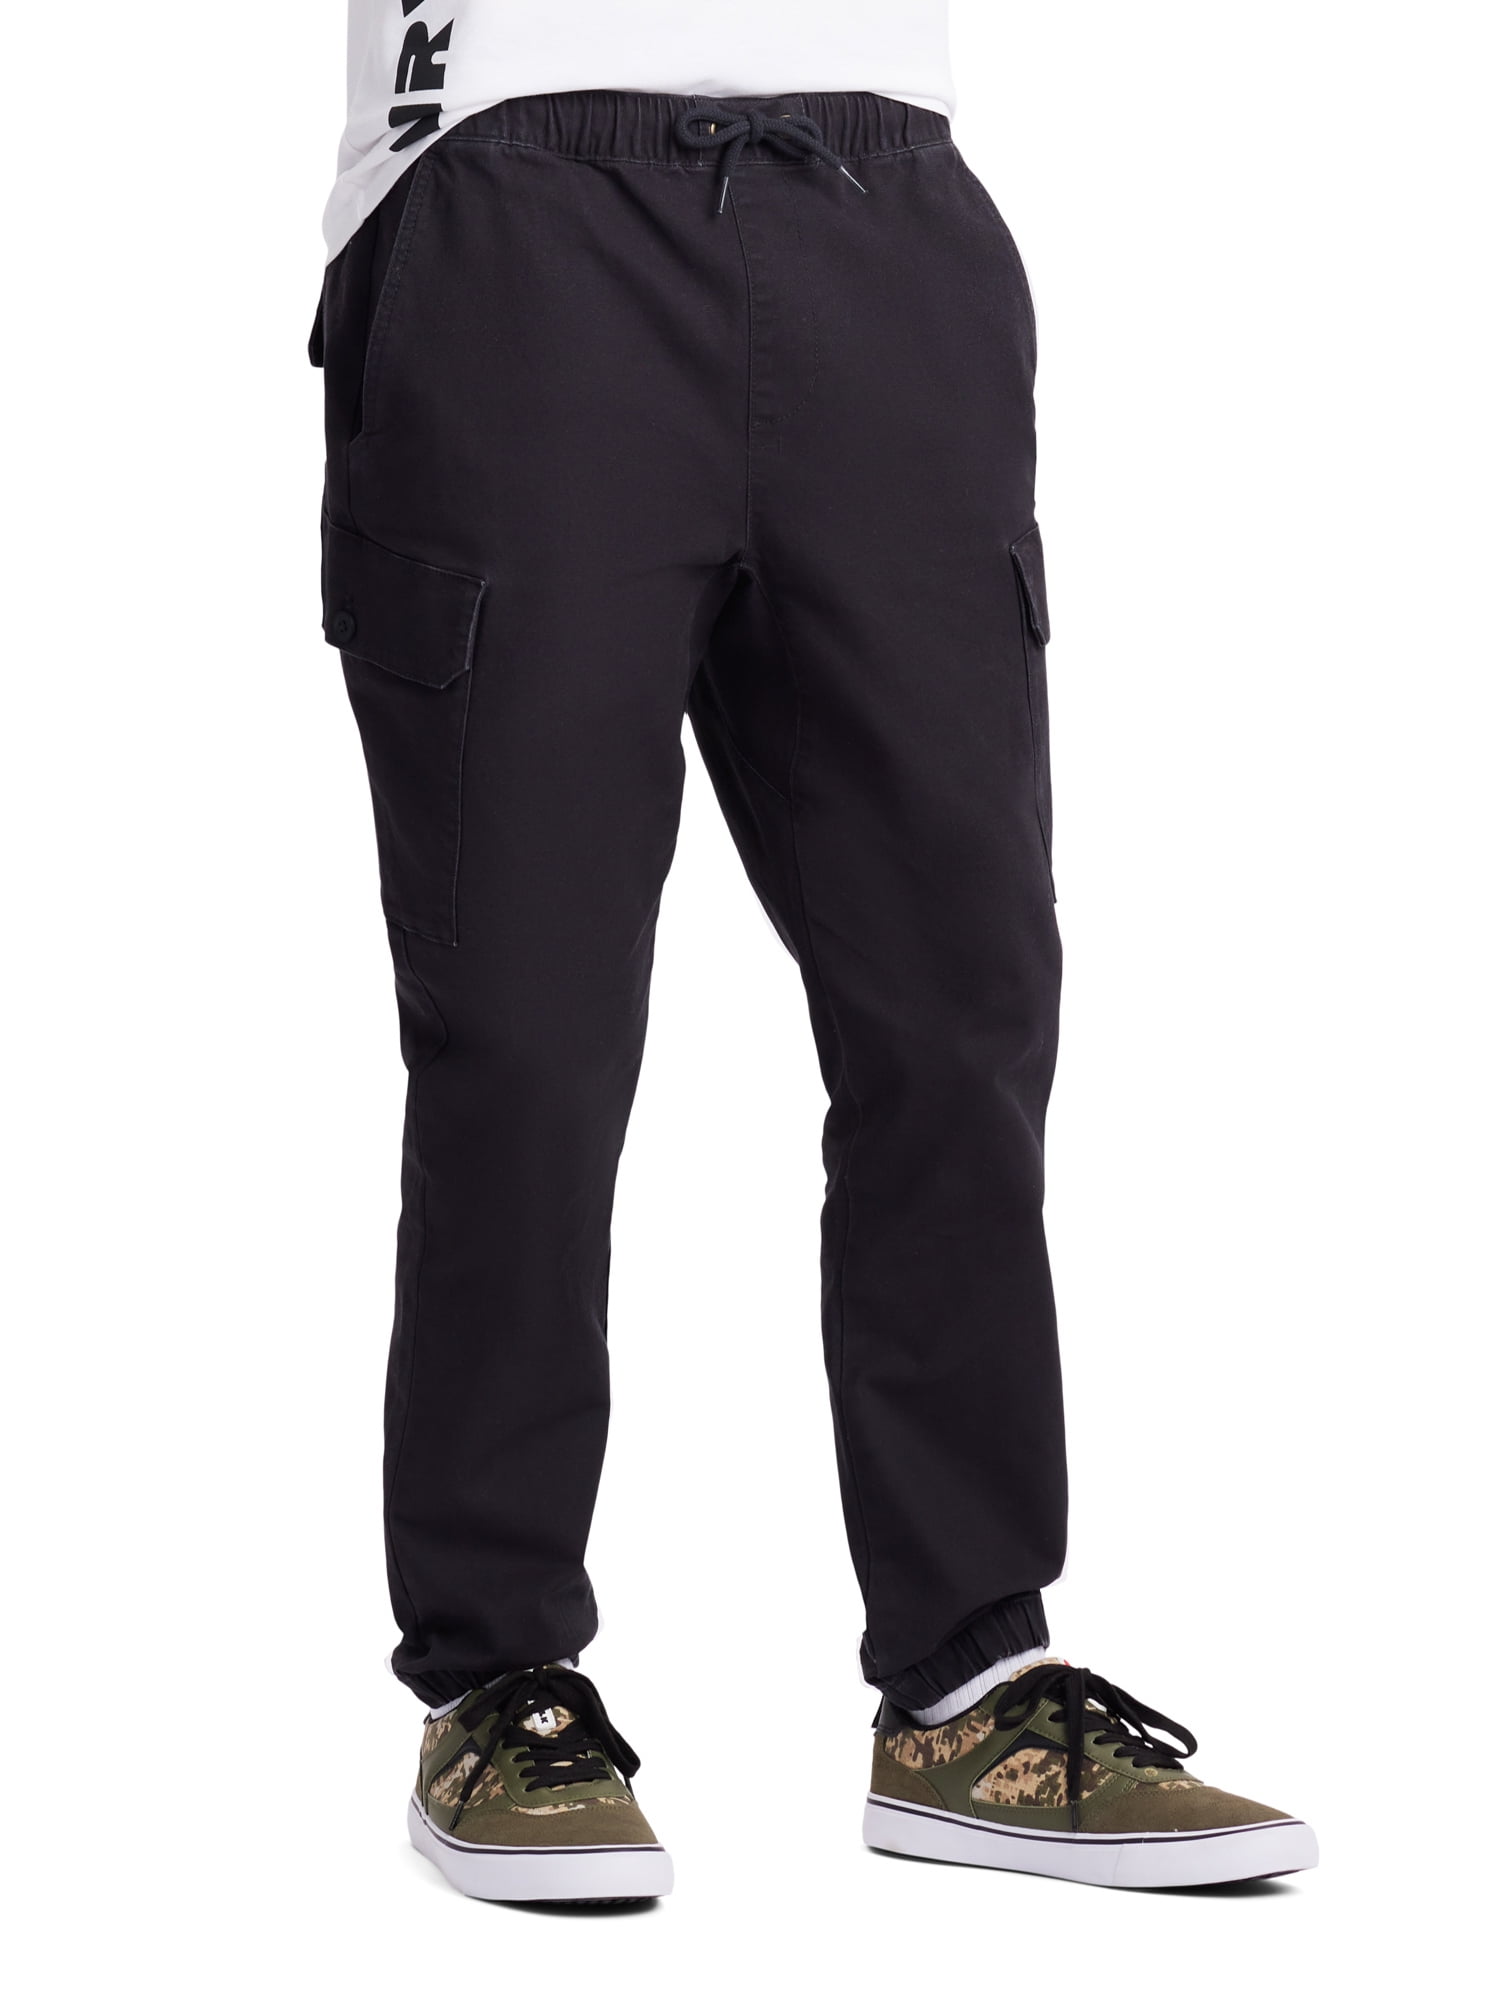 RYDCOT Men Cargo Trousers Work Wear Combat Safety Cargo 6 Pocket Full Pants  Khaki XXL 